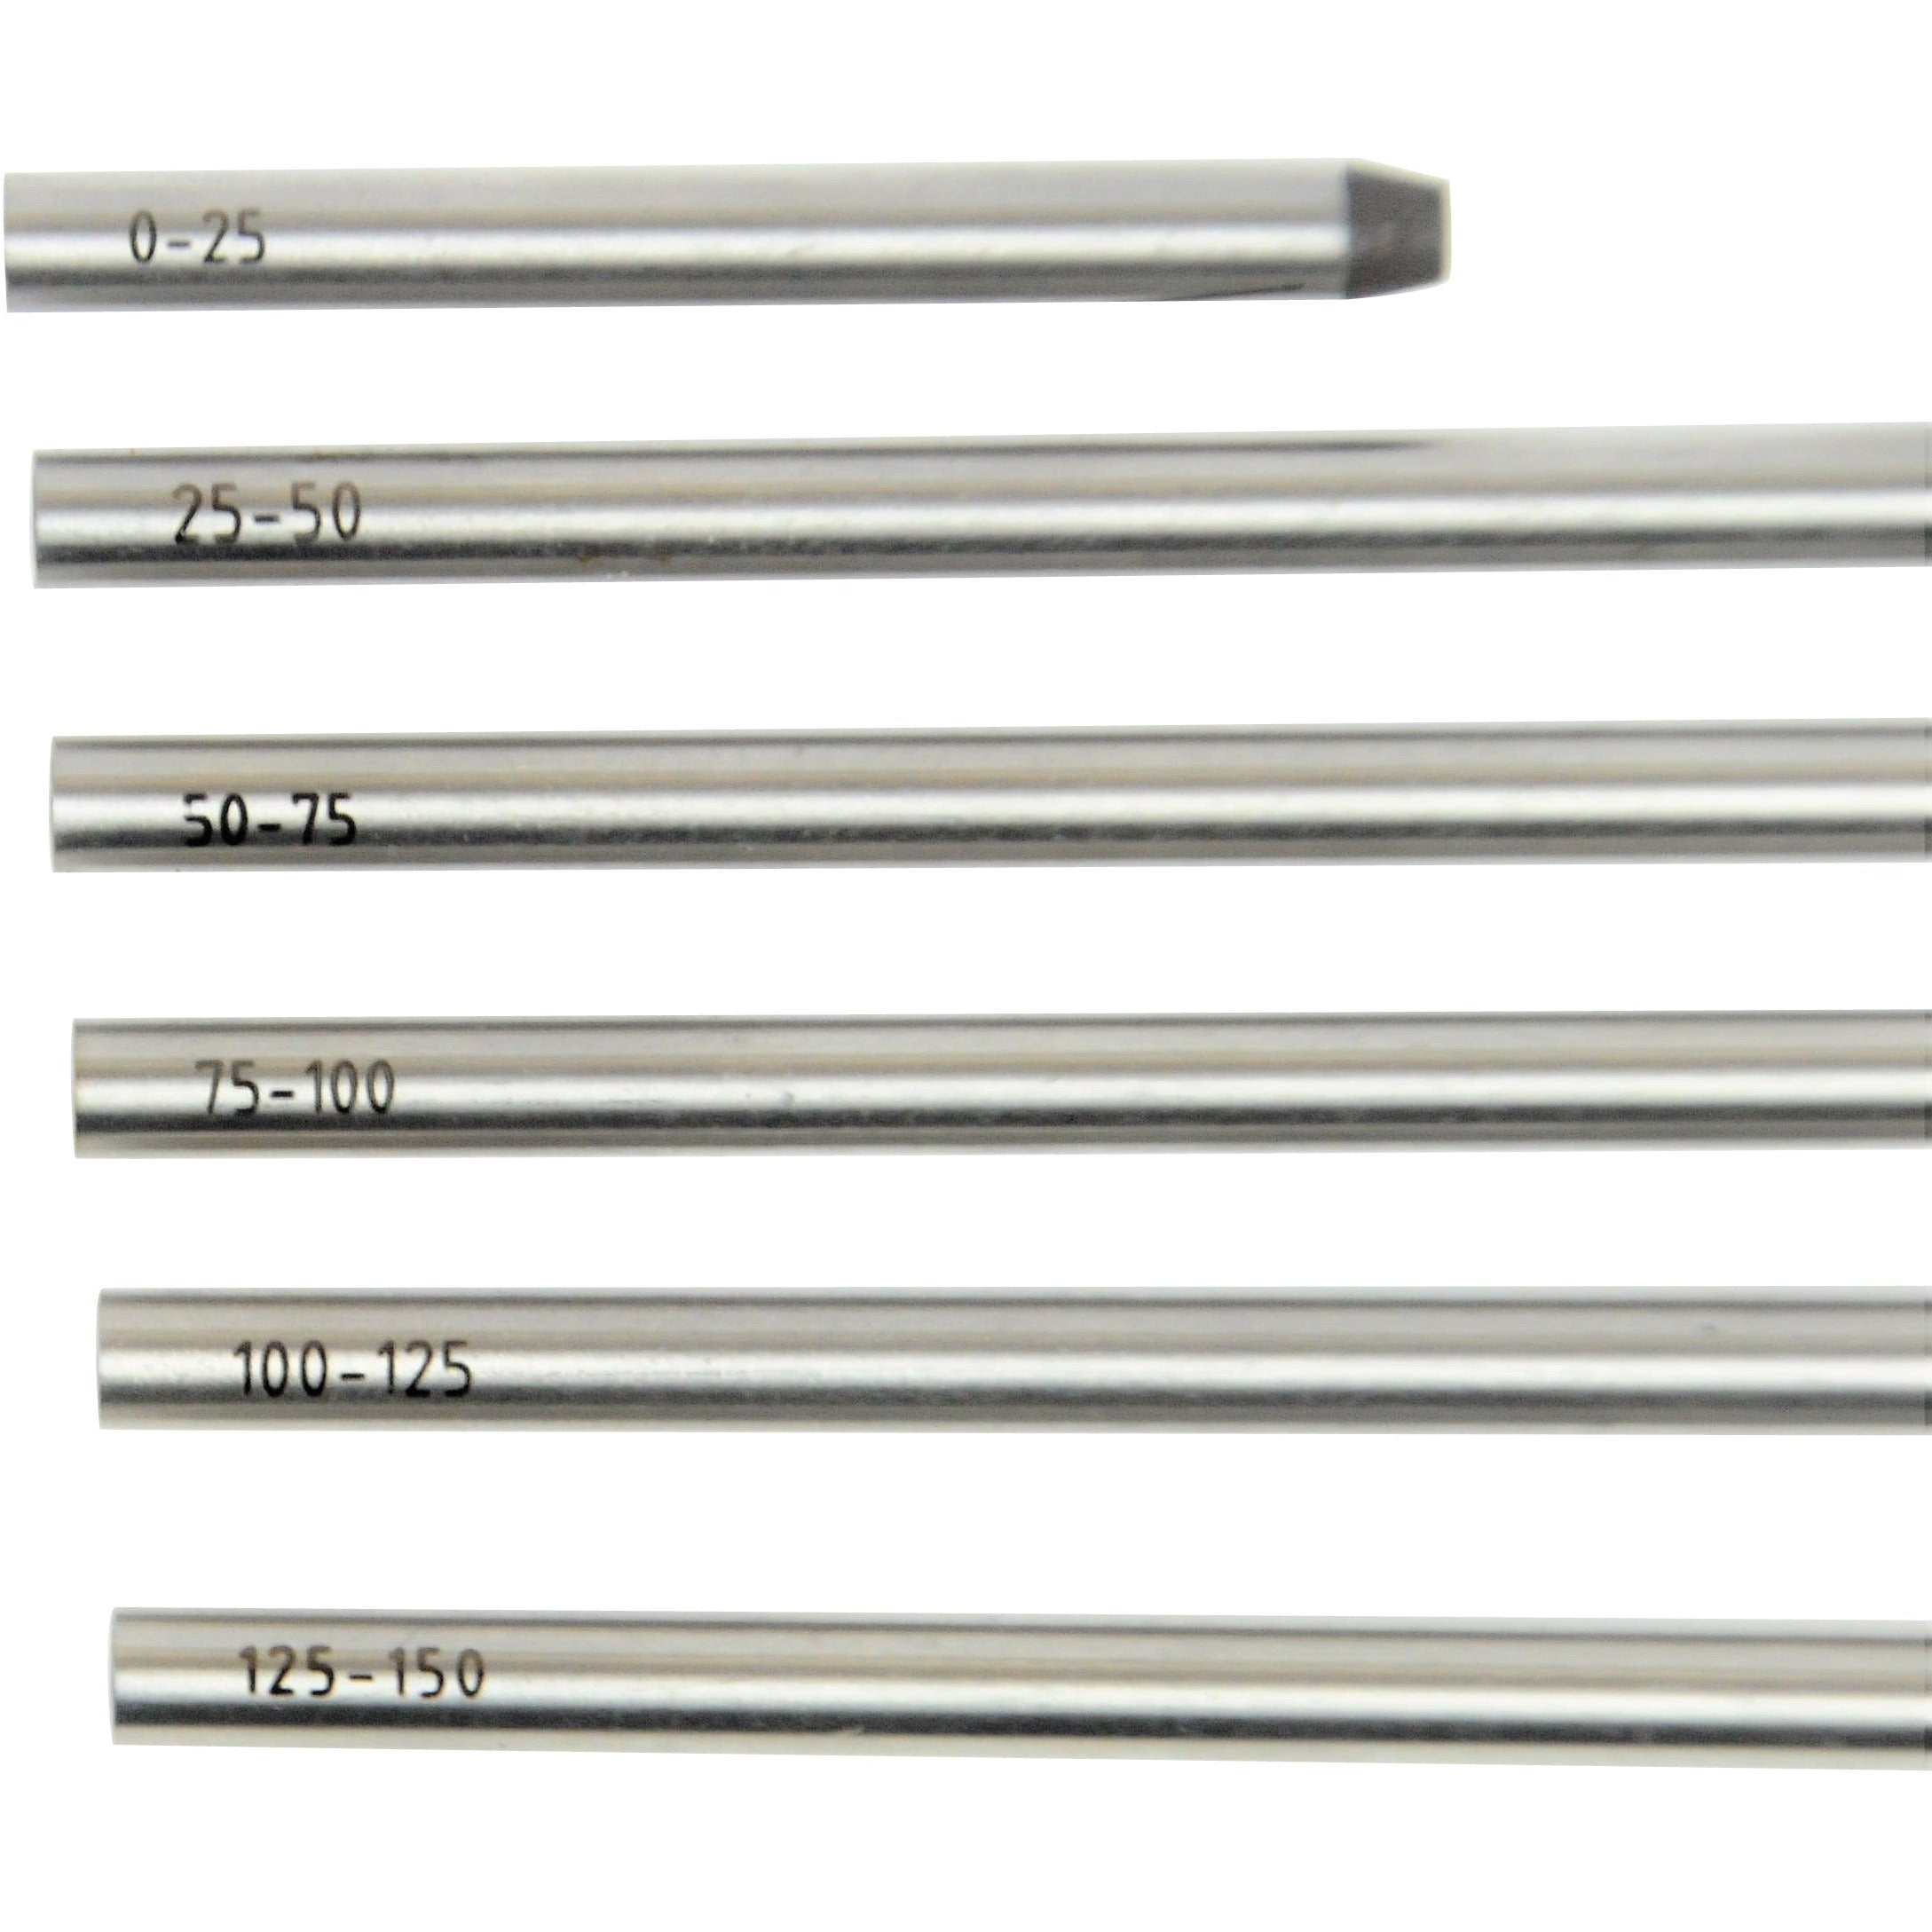 Insize Imperial Depth Micrometer 0-150mm Range Series 3240 - 150